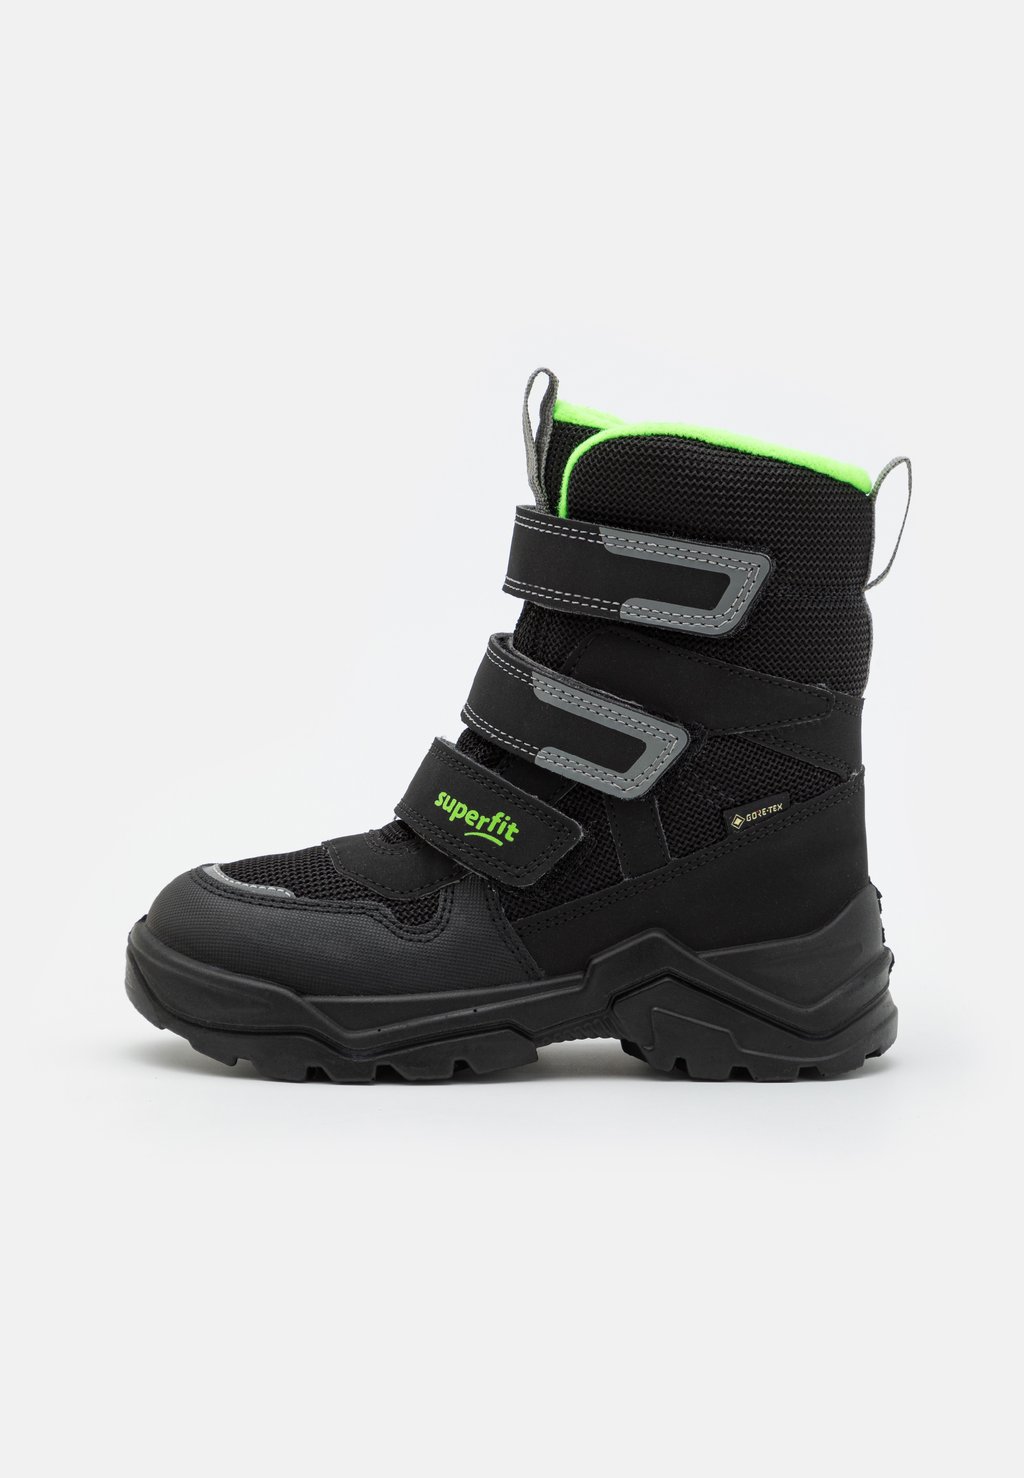 Зимние ботинки/зимние ботинки MAX Superfit, цвет black/green